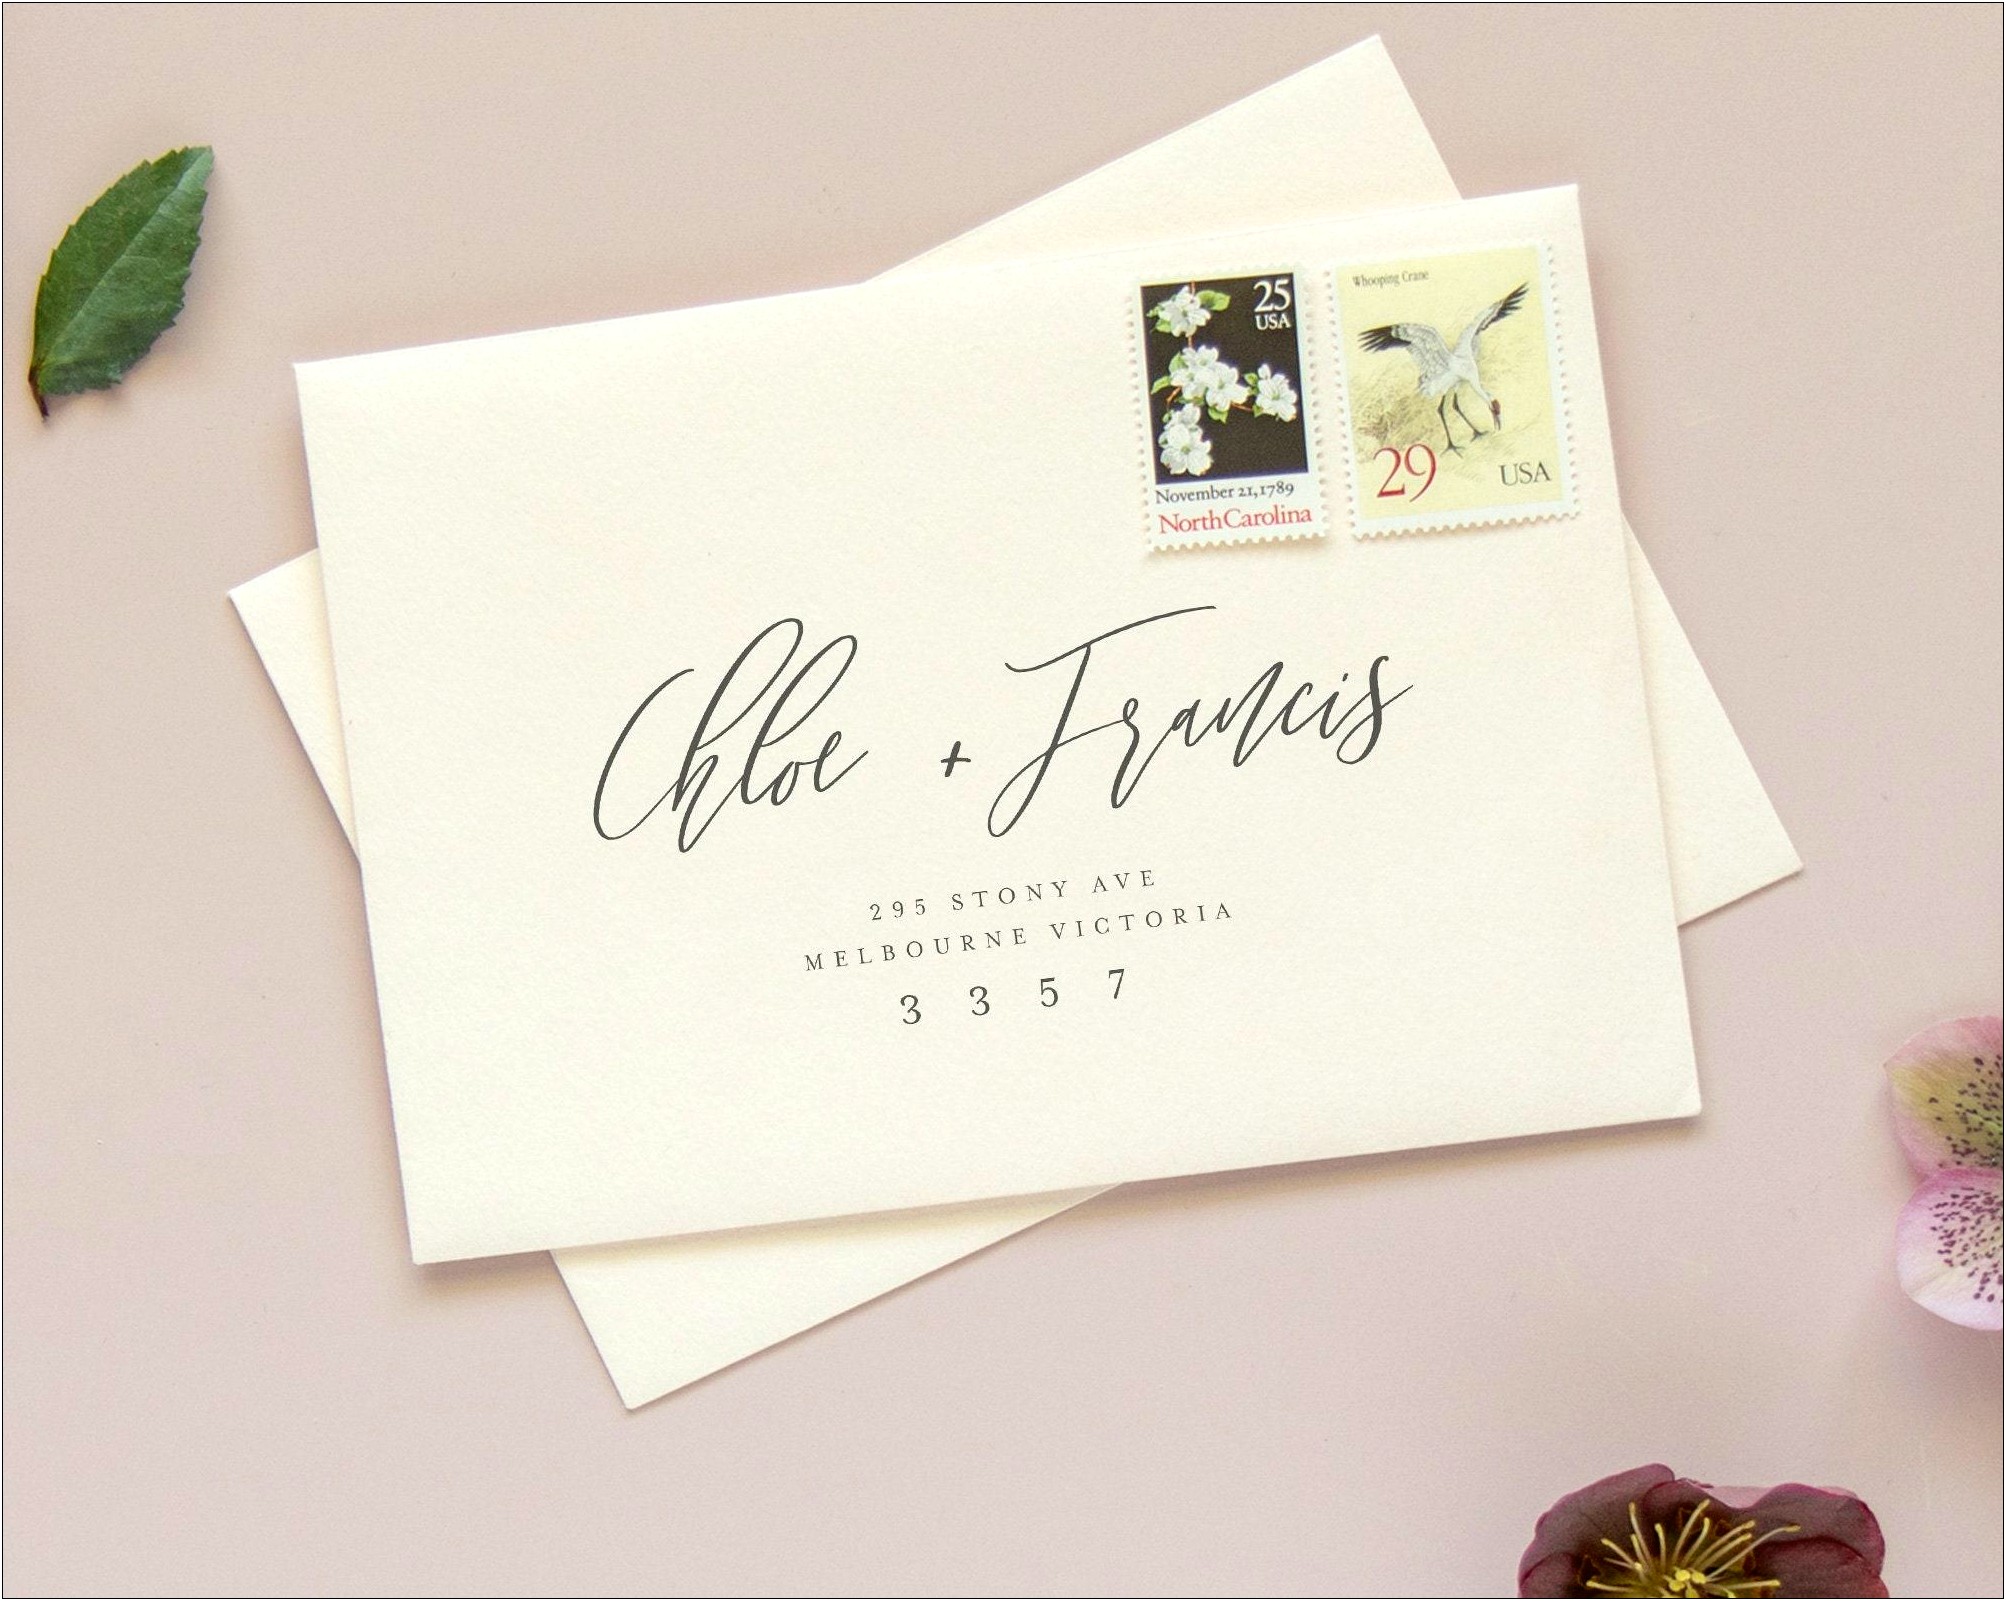 Font To Use For Wedding Invitation Envelopes